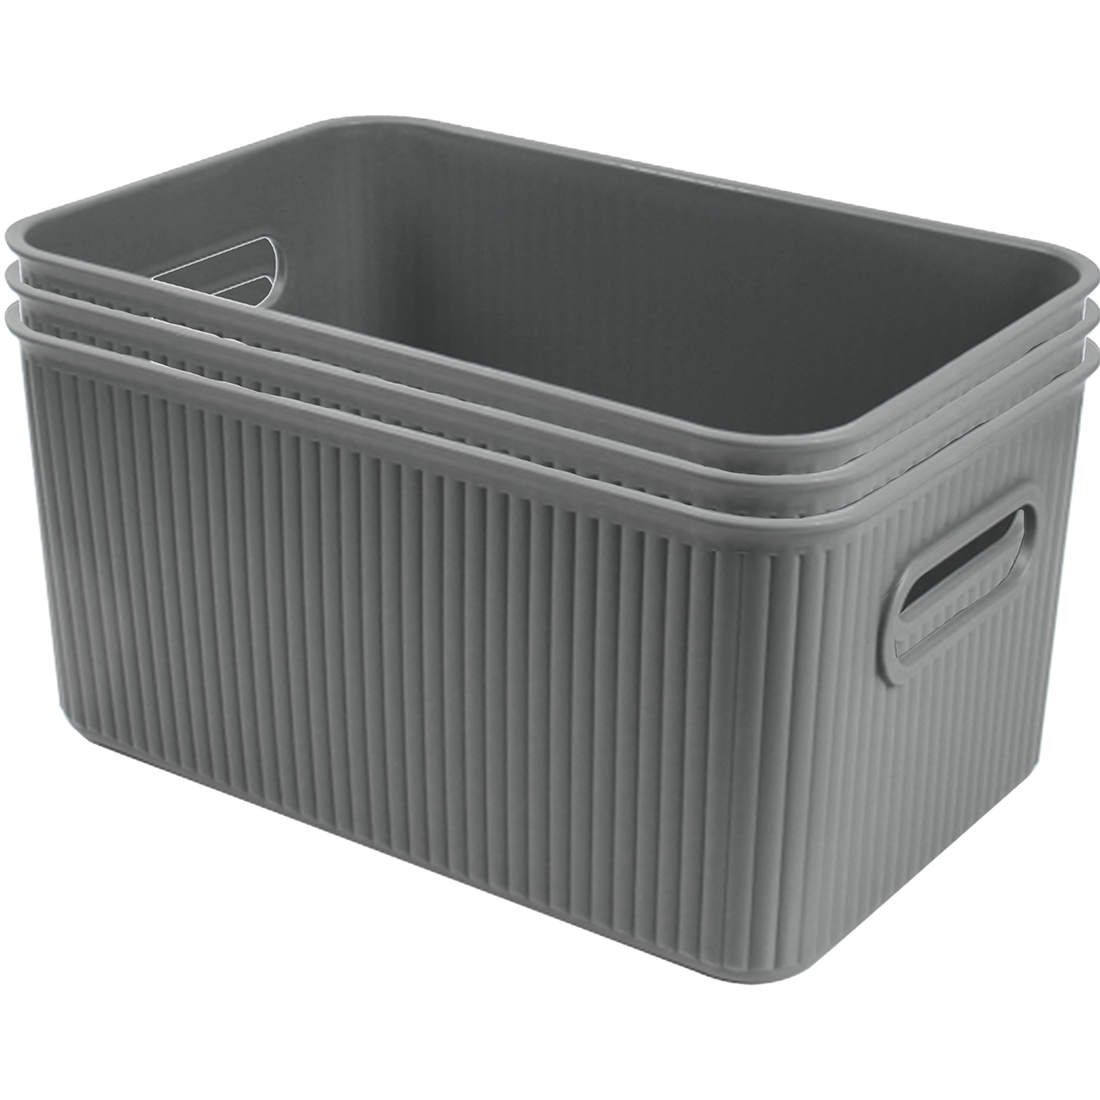 3 Pack Woven Plastic Storage Basket - Striped Grey